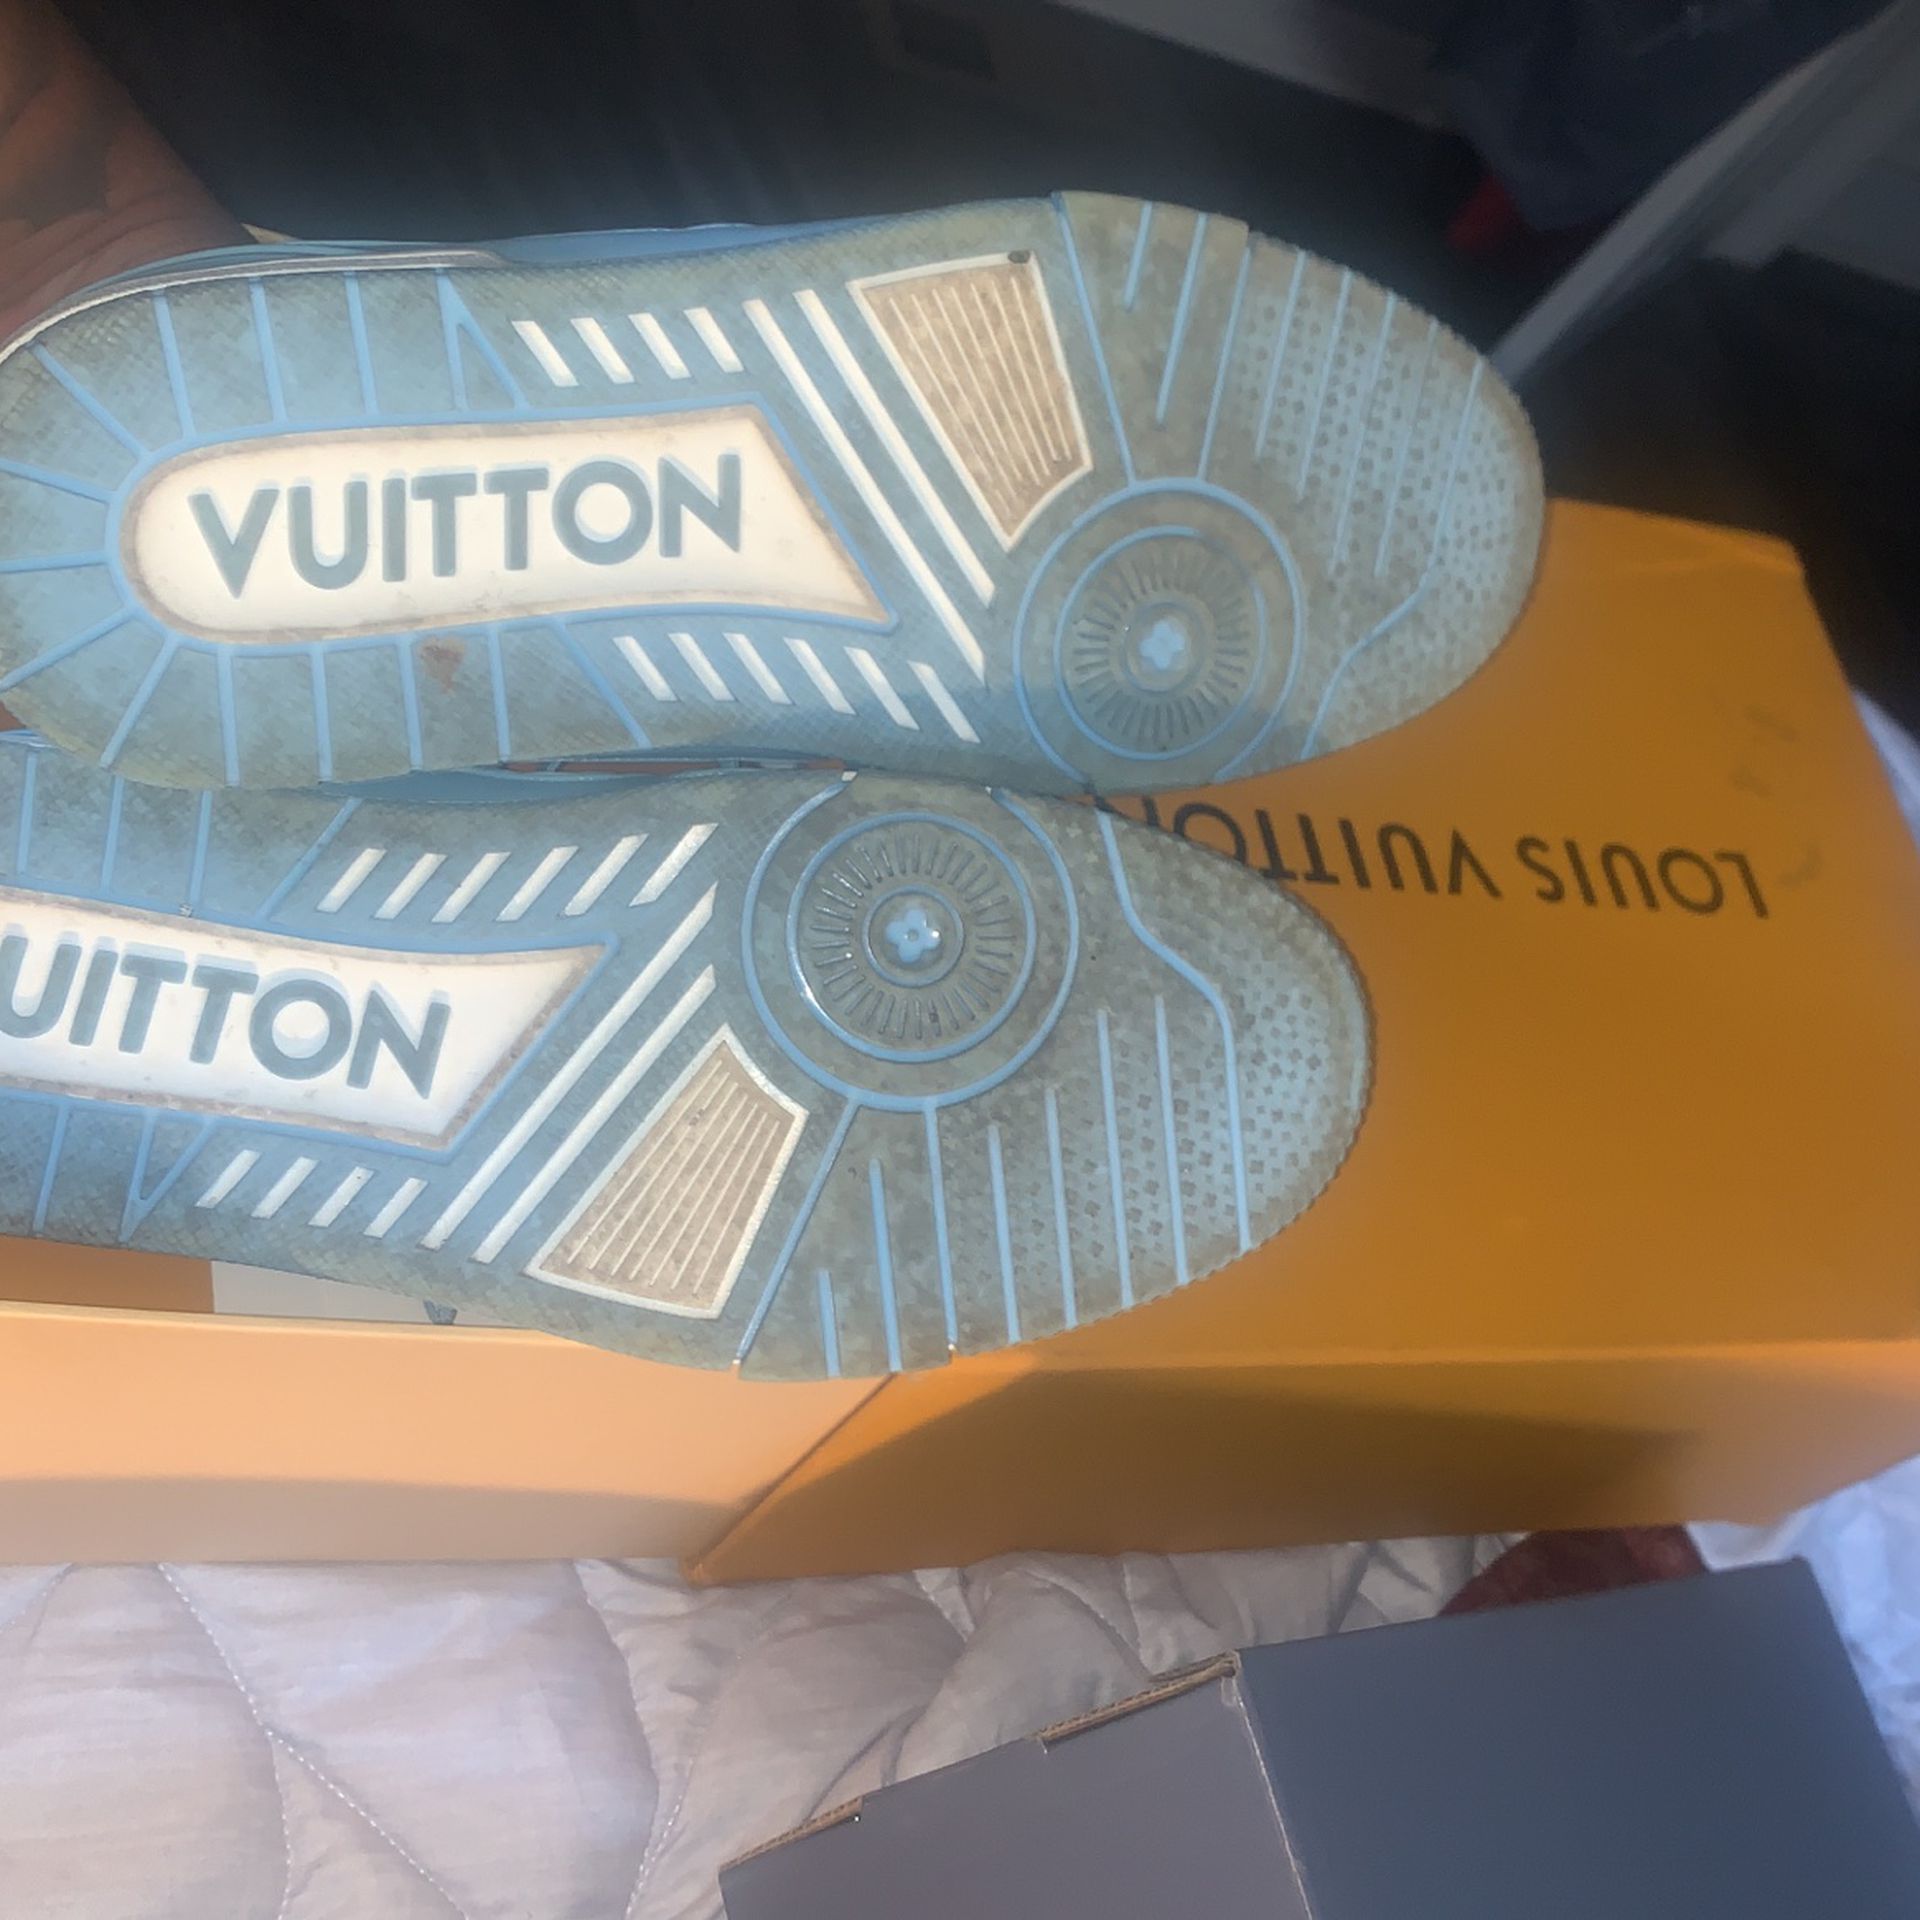 Louis Vuitton Sneakers for Sale in Philadelphia, PA - OfferUp